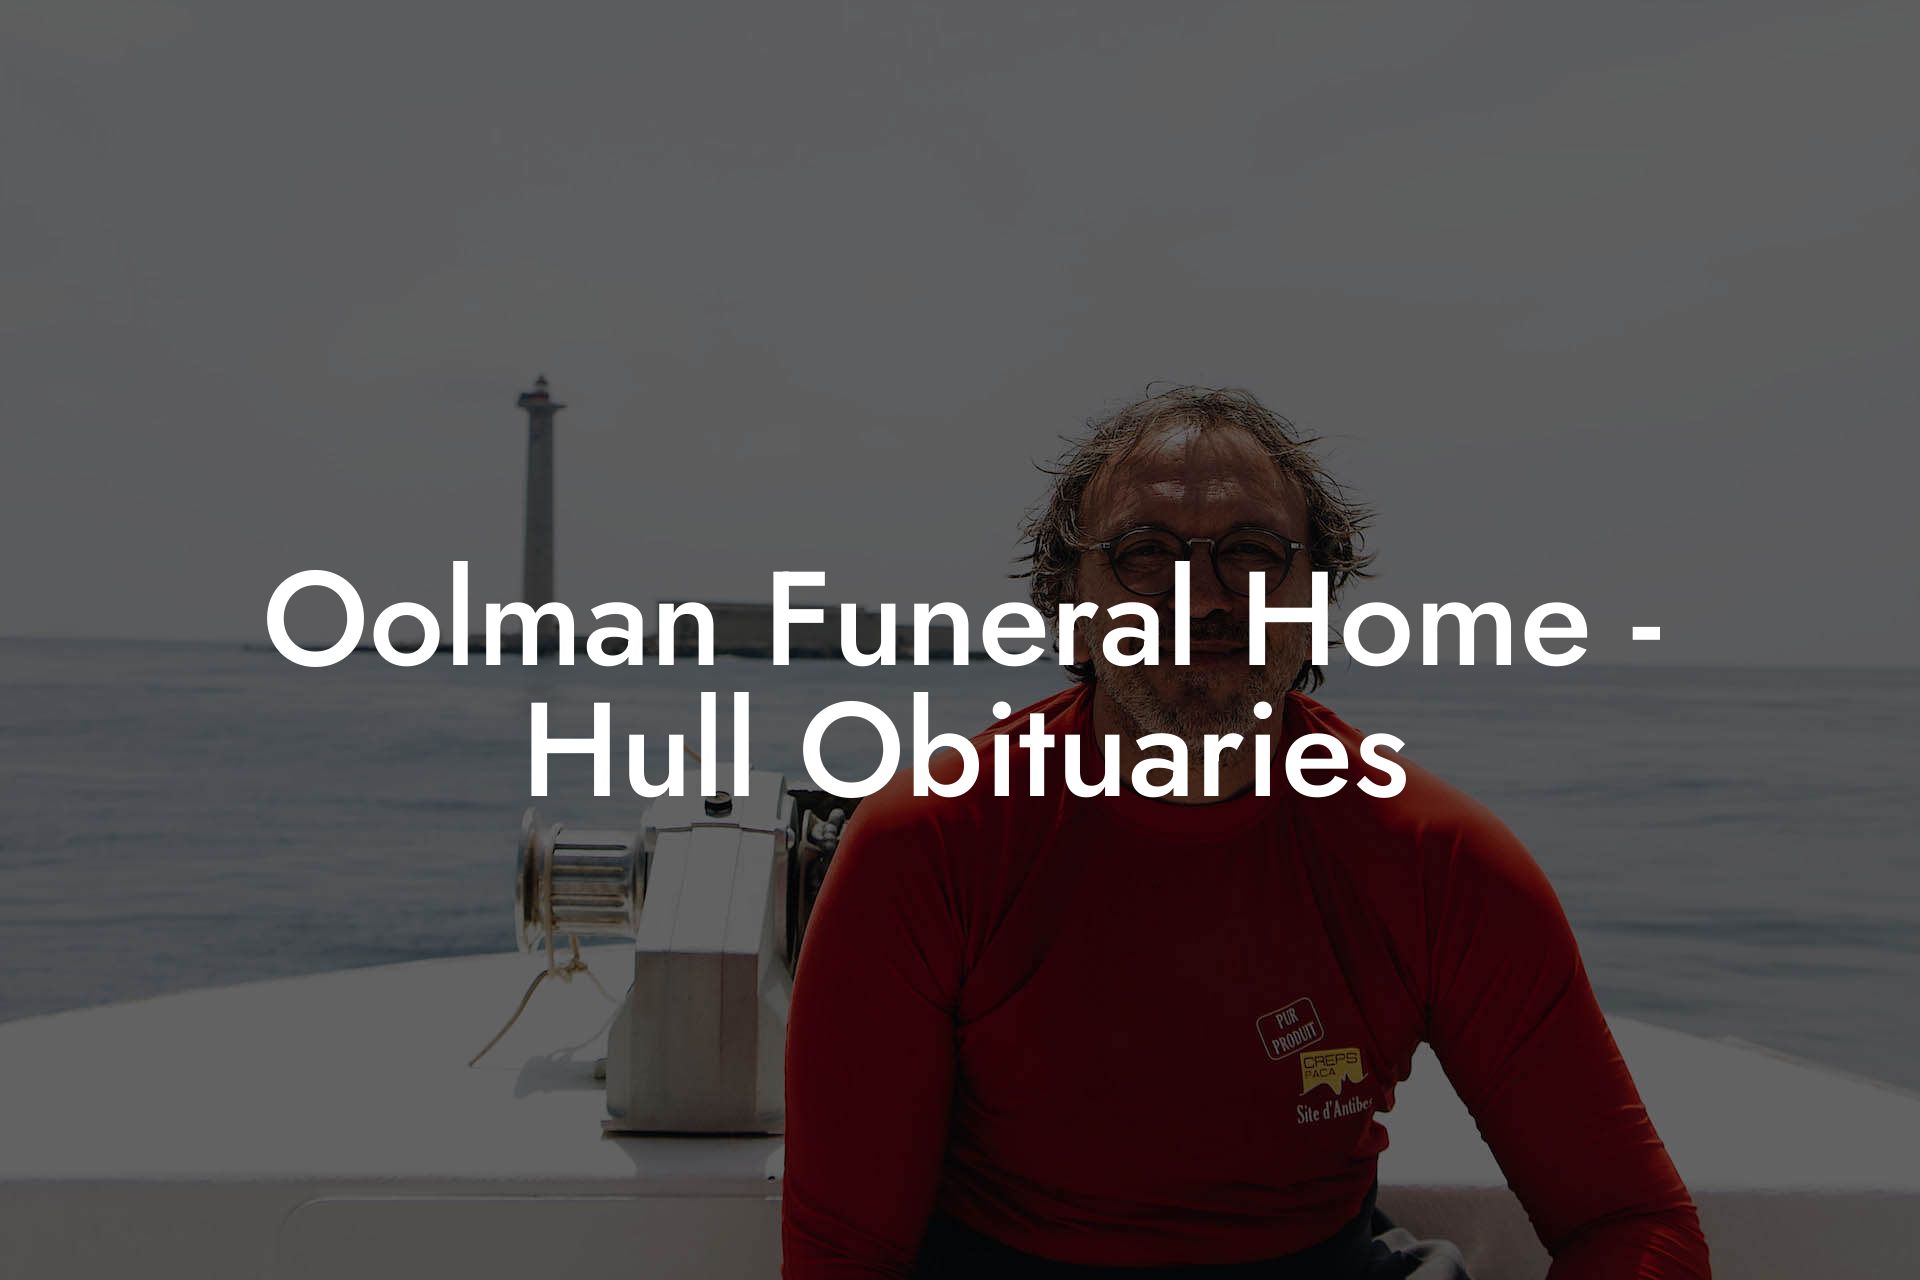 Oolman Funeral Home - Hull Obituaries